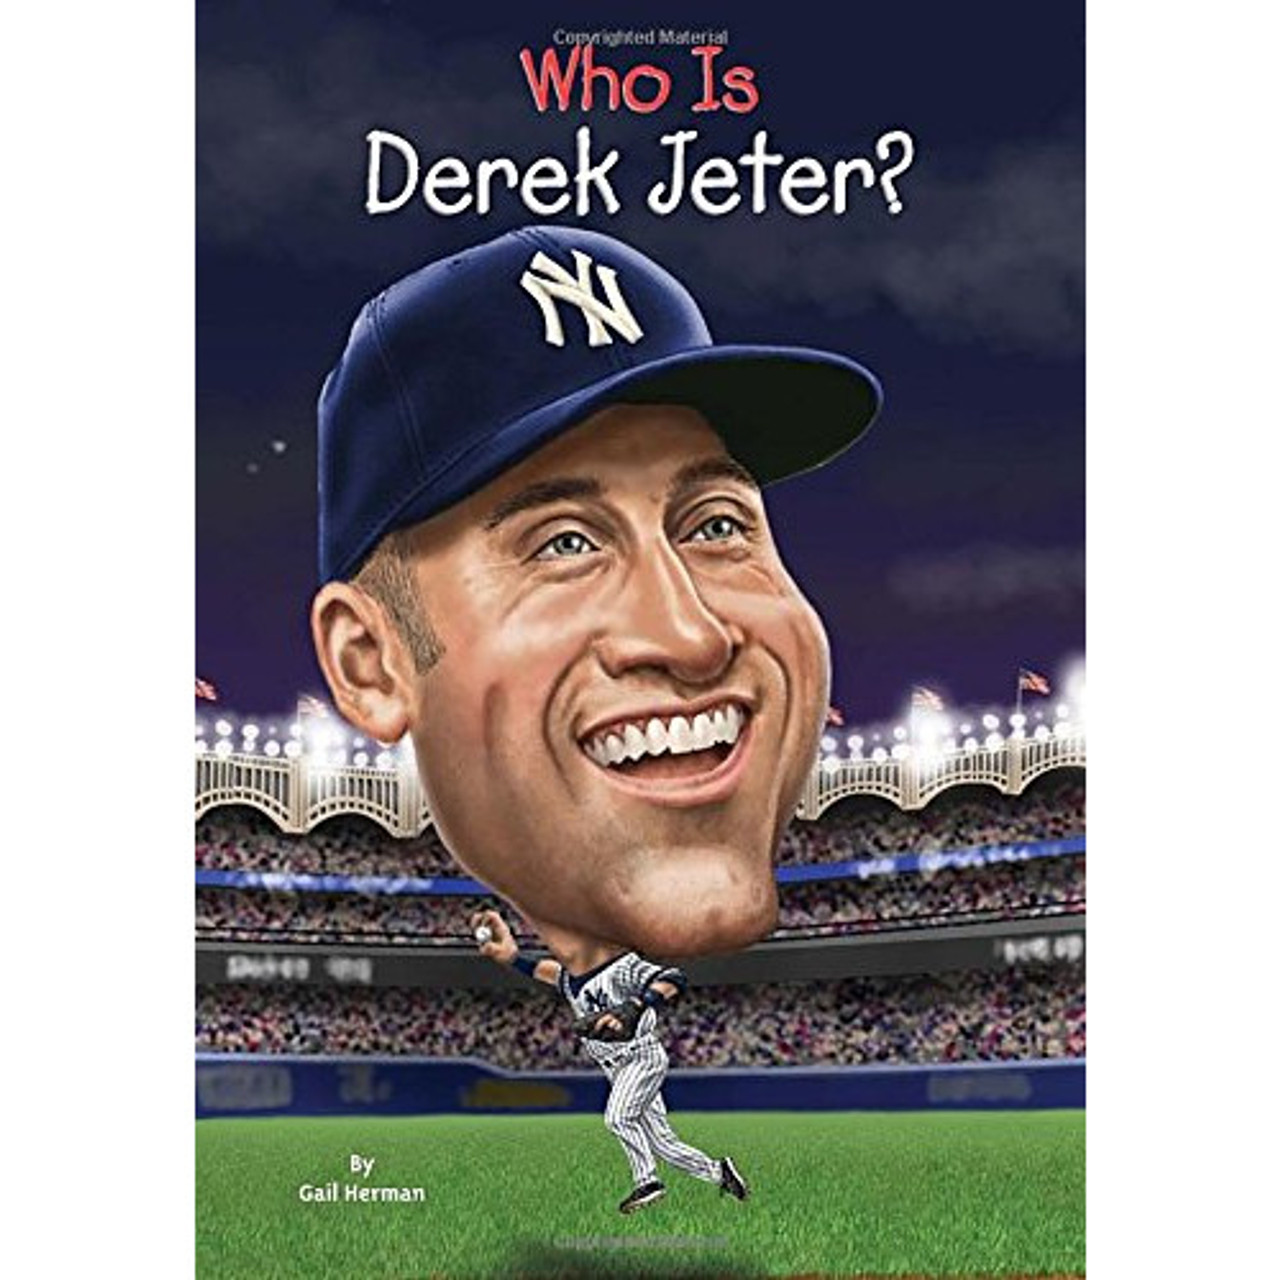 Derek Jeter wins first World Series title as captain of New York